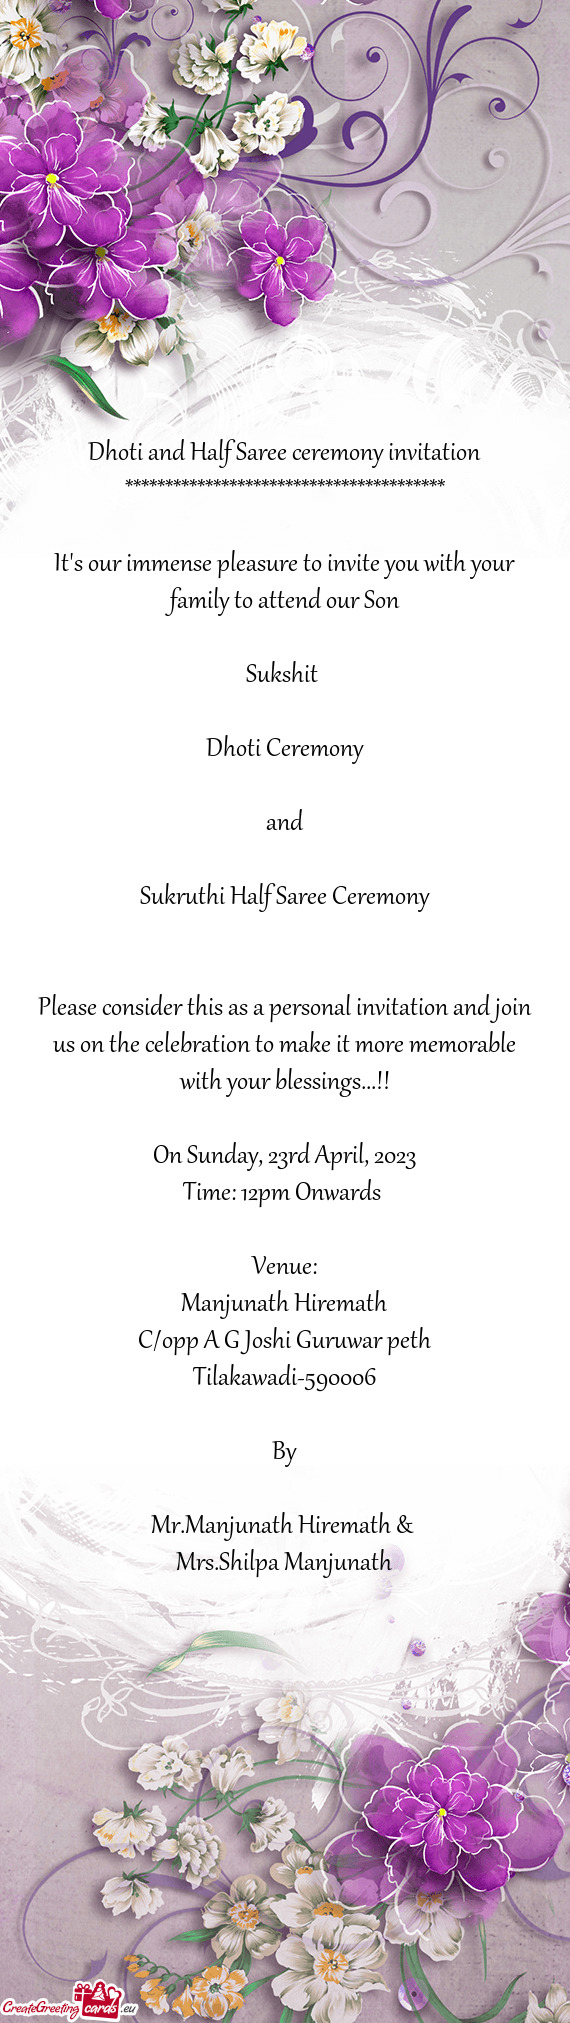 Sukruthi Half Saree Ceremony